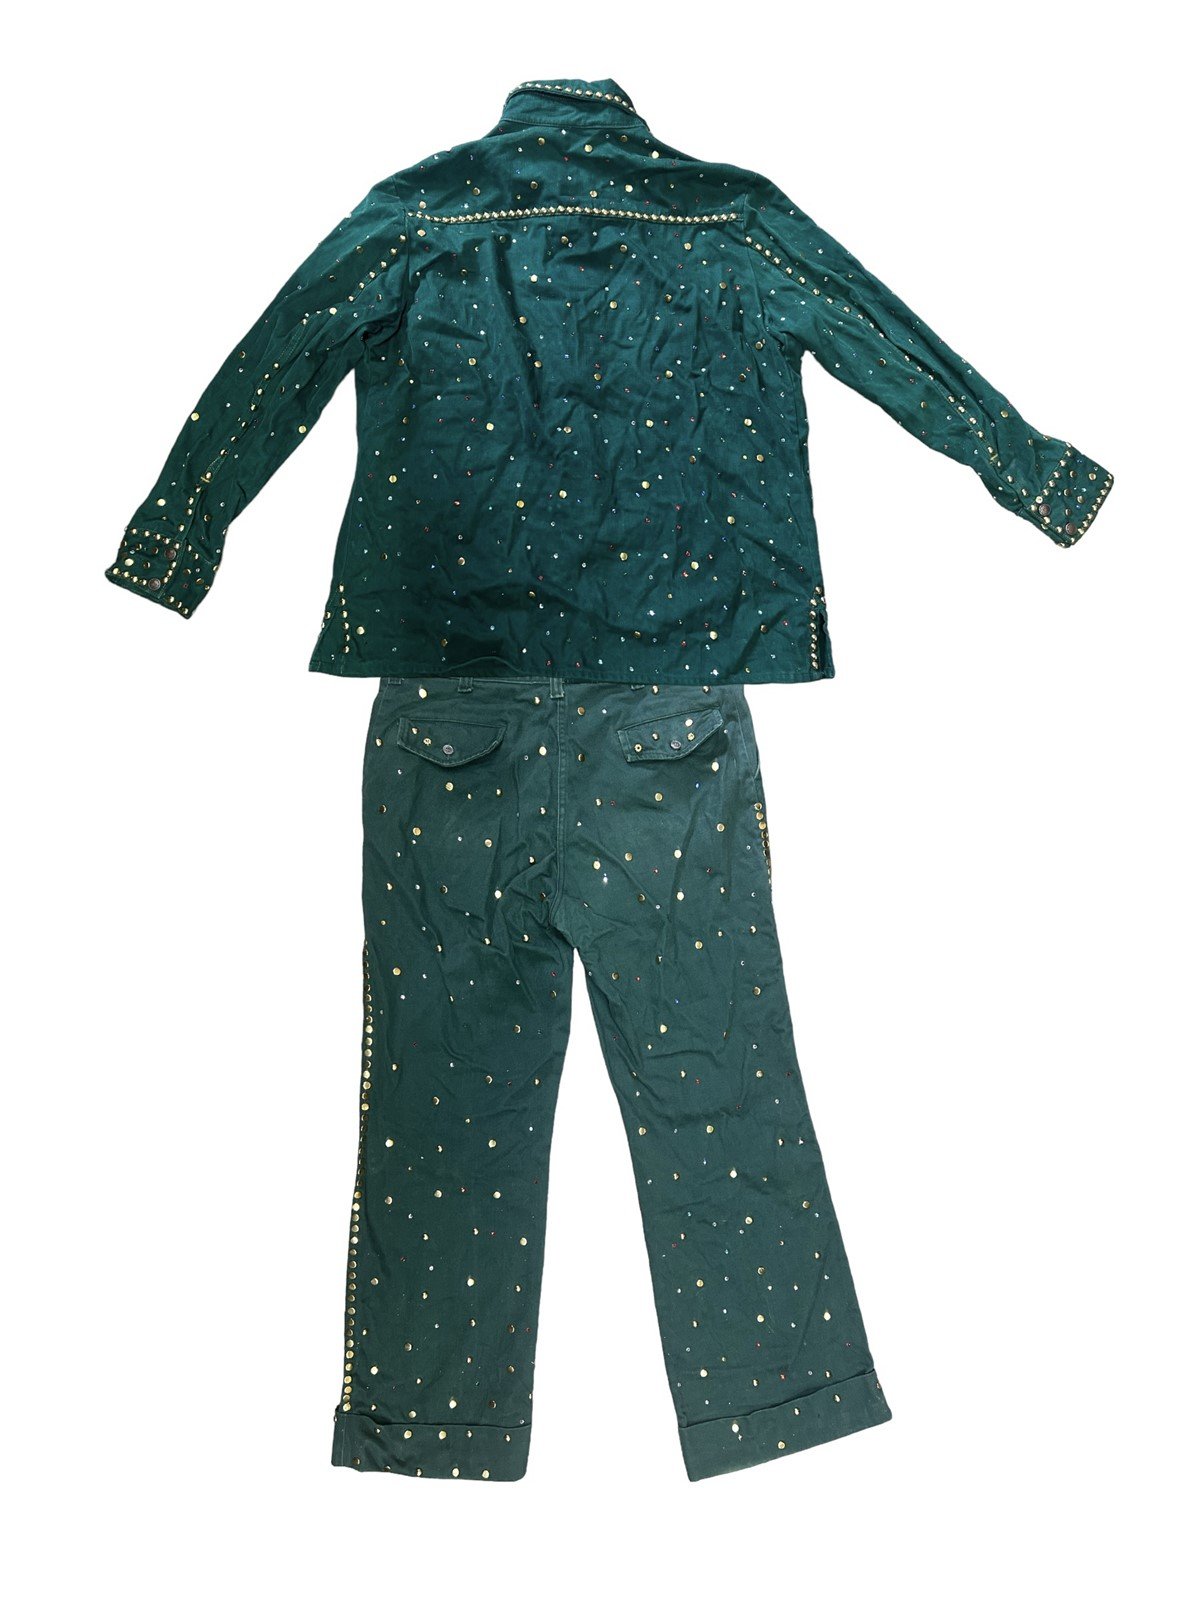 Denim Emerald Green Bejewled Gold Gem Handmade Dancing Matching Jacket & Pants